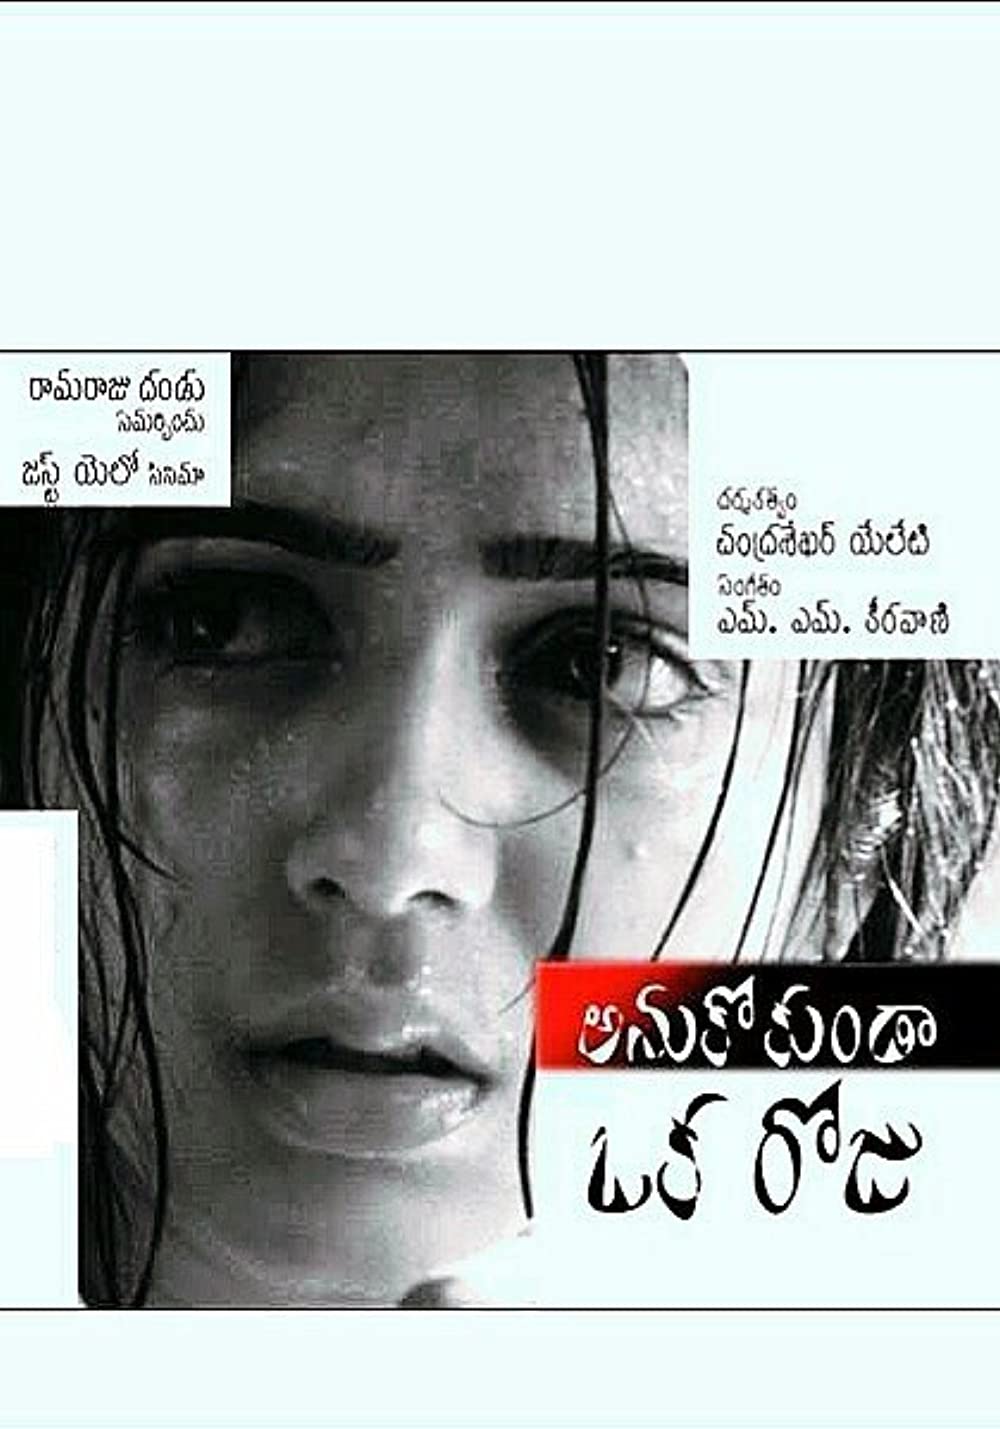 Anukokunda Oka Roju (2005) is a south indian suspense thriller movie